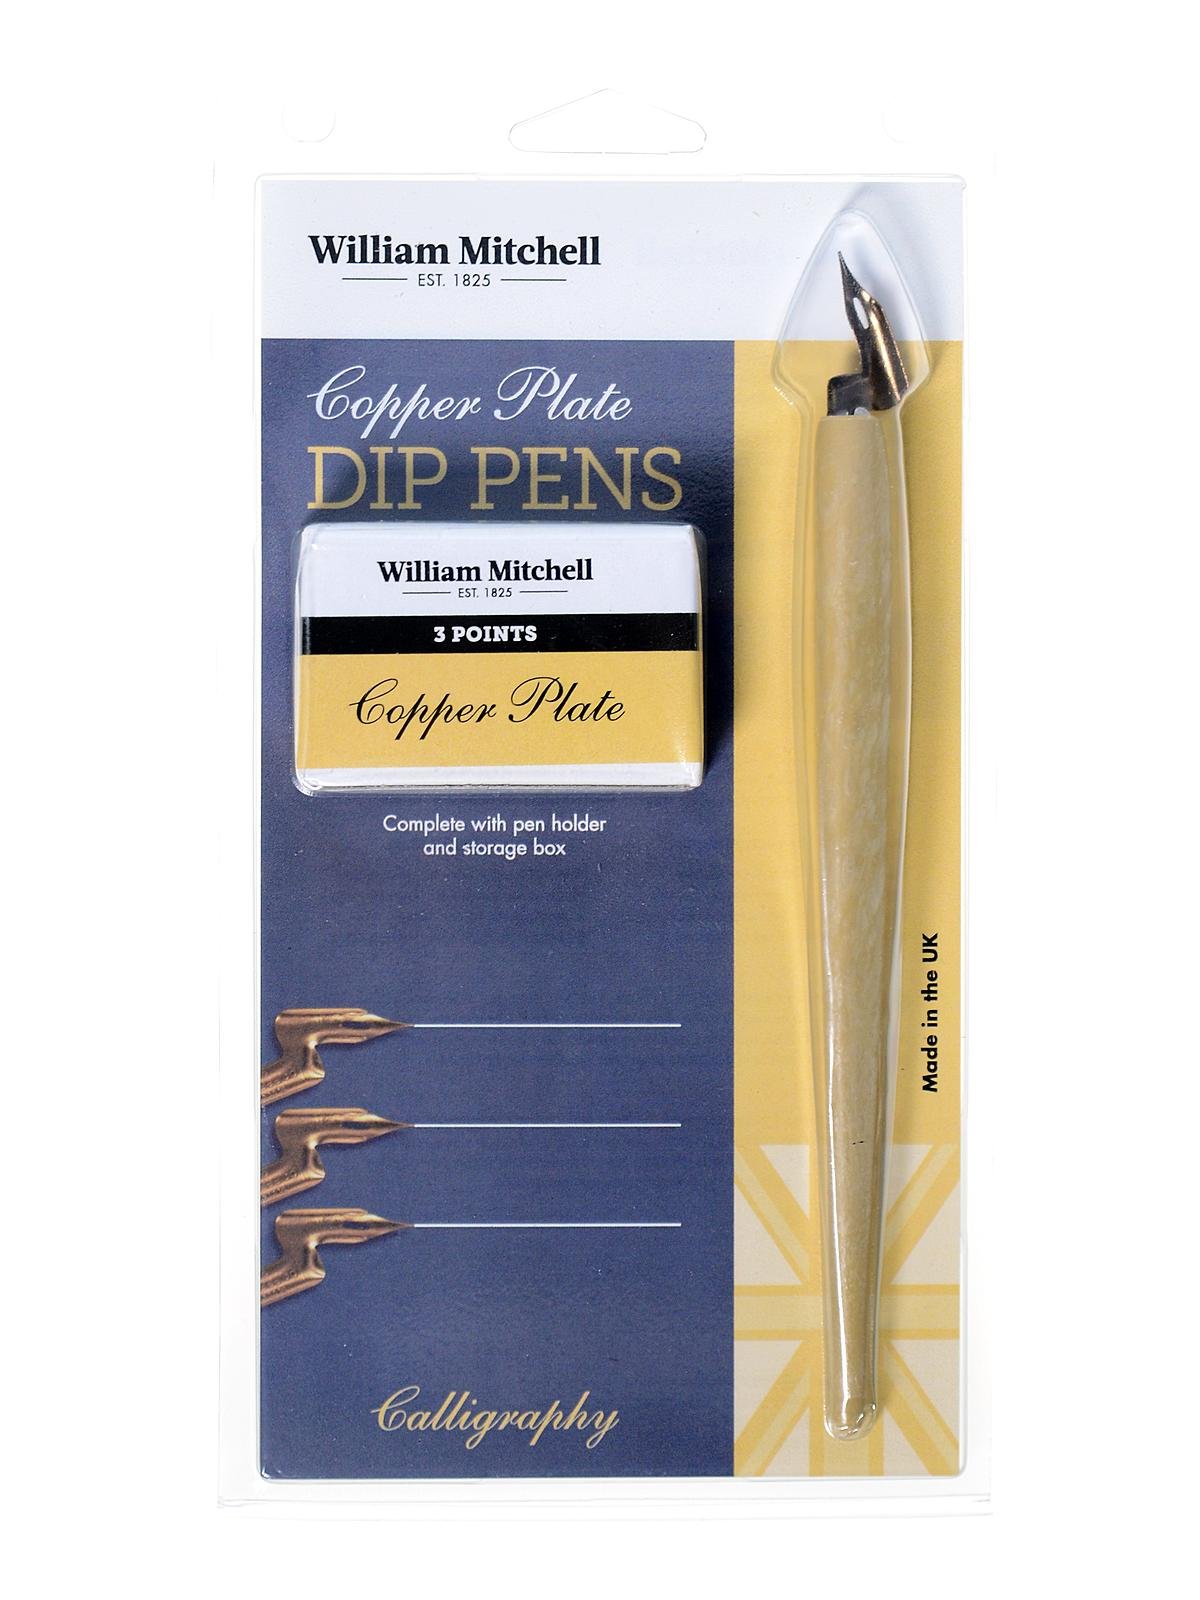 William Mitchell - Copper Plate Dip Pens